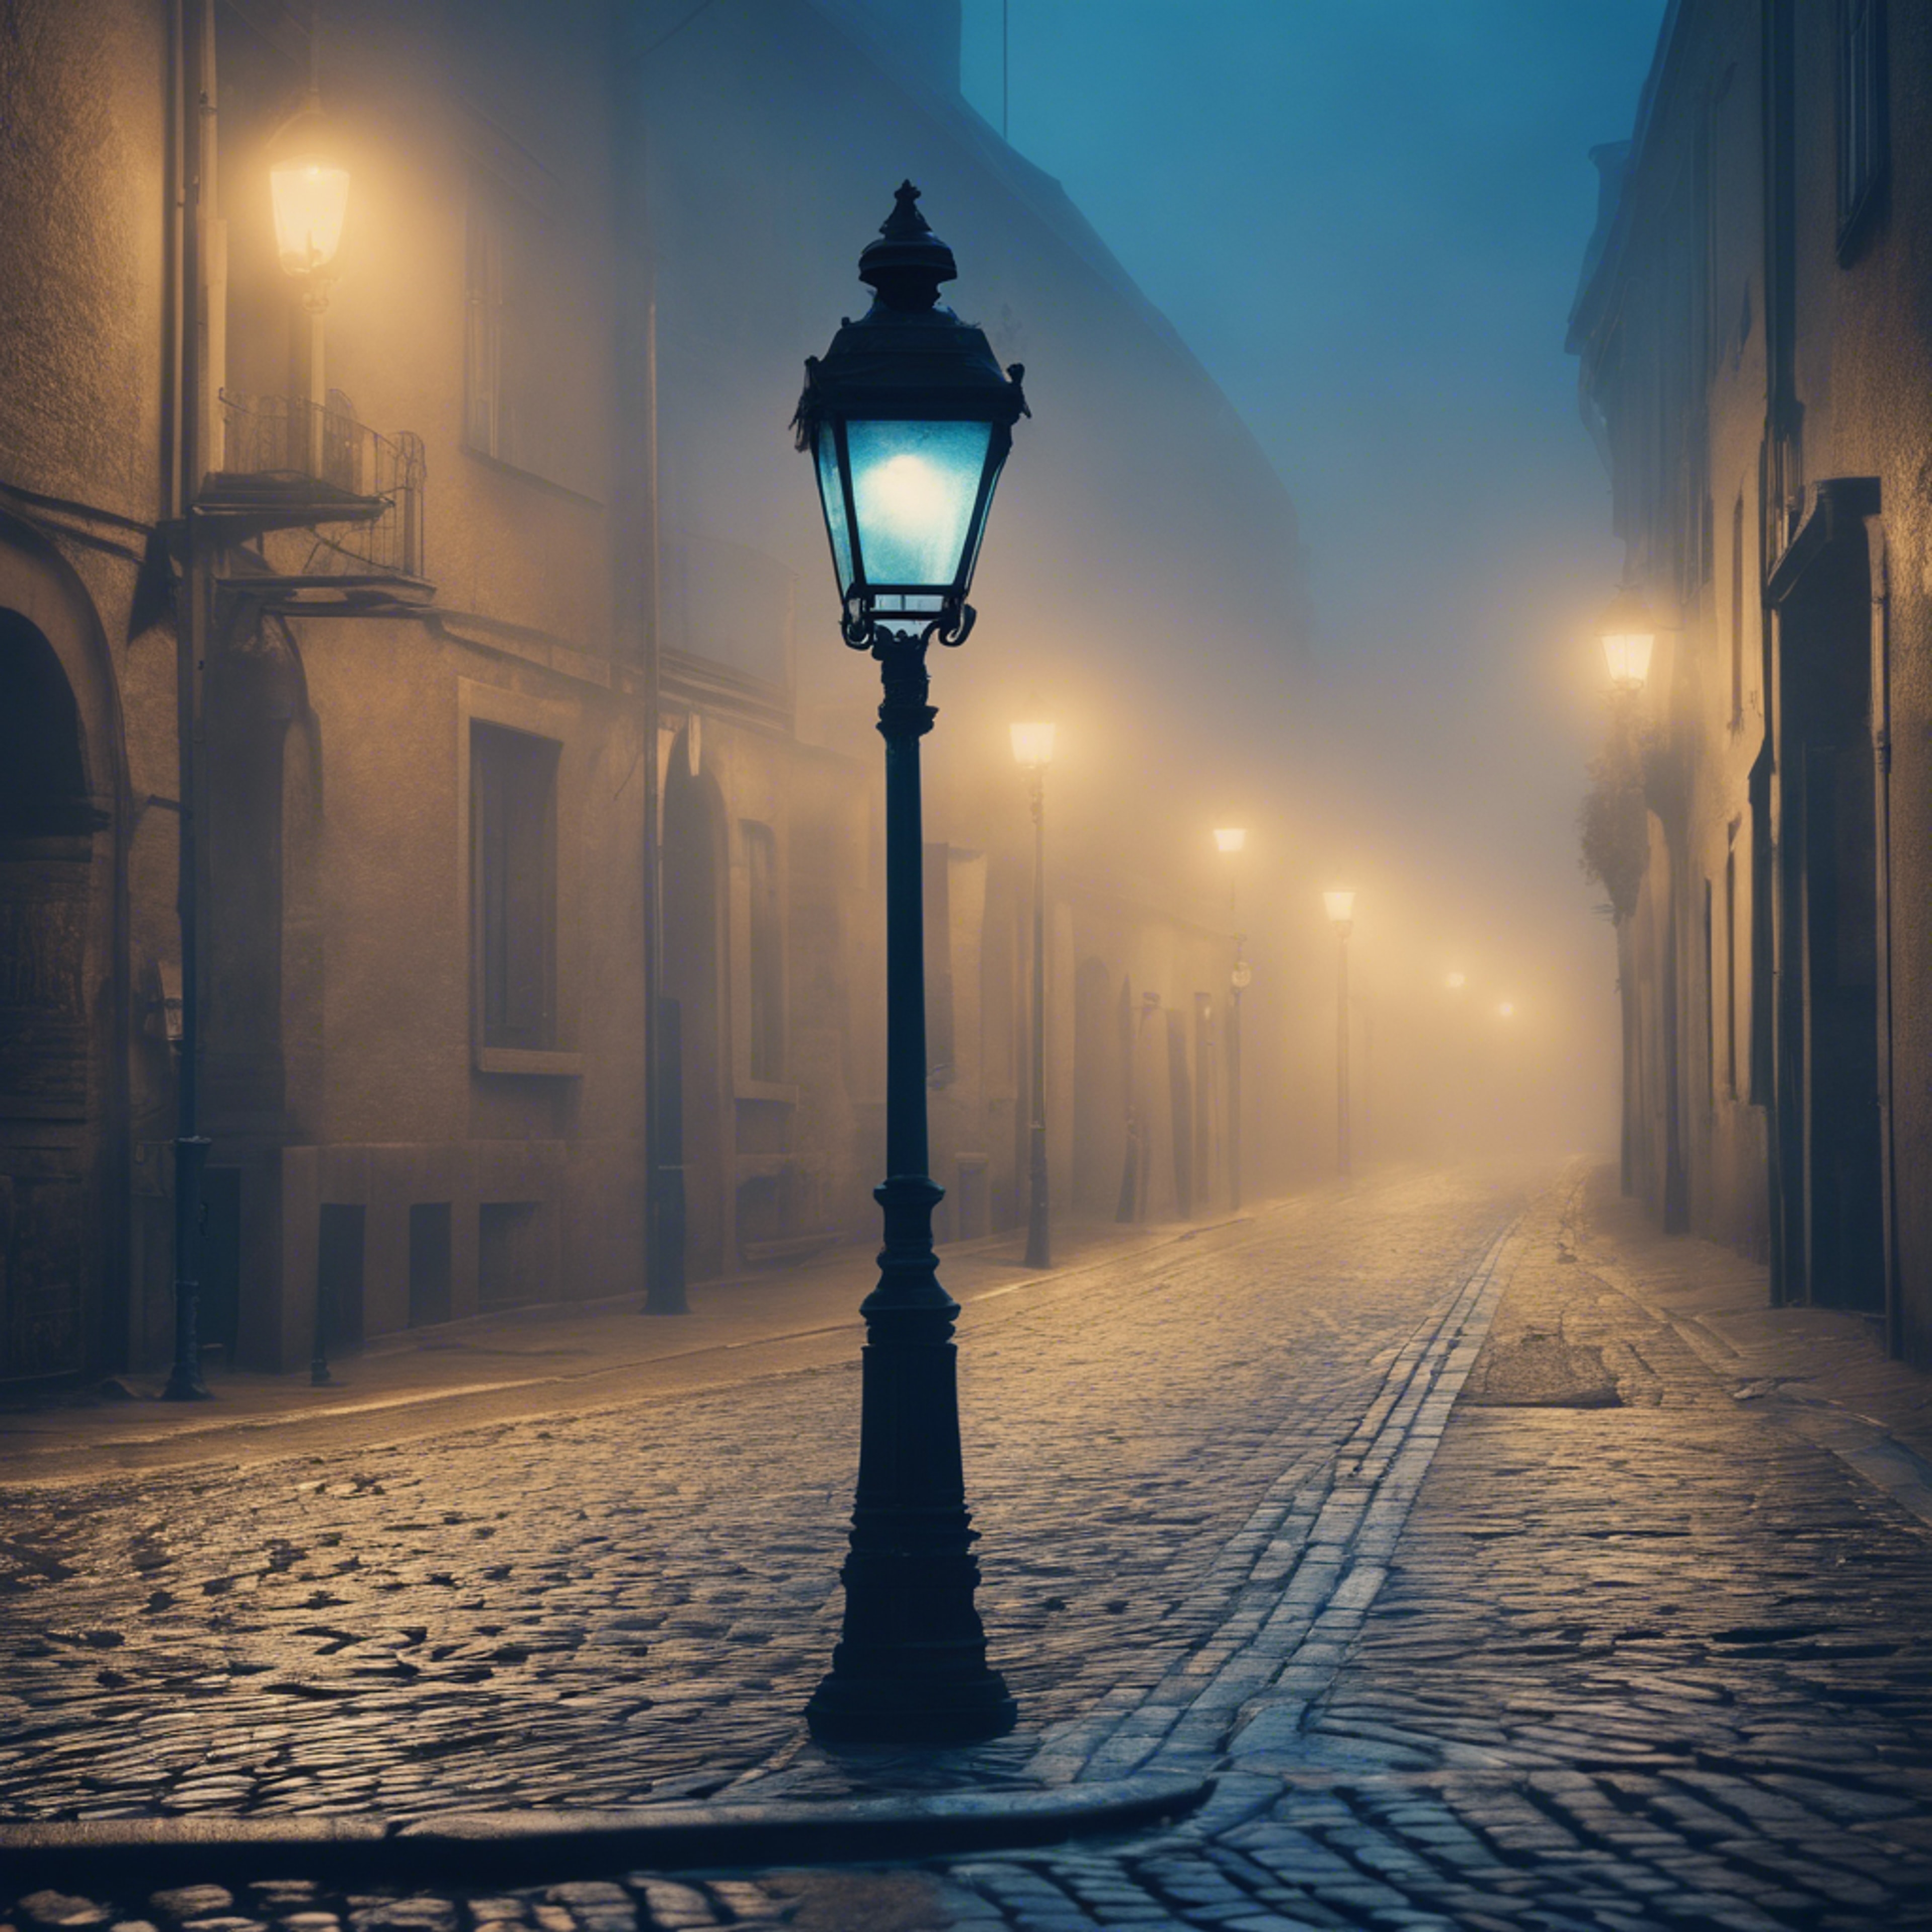 A foggy image of a cobblestone street lit by an old blue lamp post. ផ្ទាំង​រូបភាព[86a8420f9b4d45a484bd]